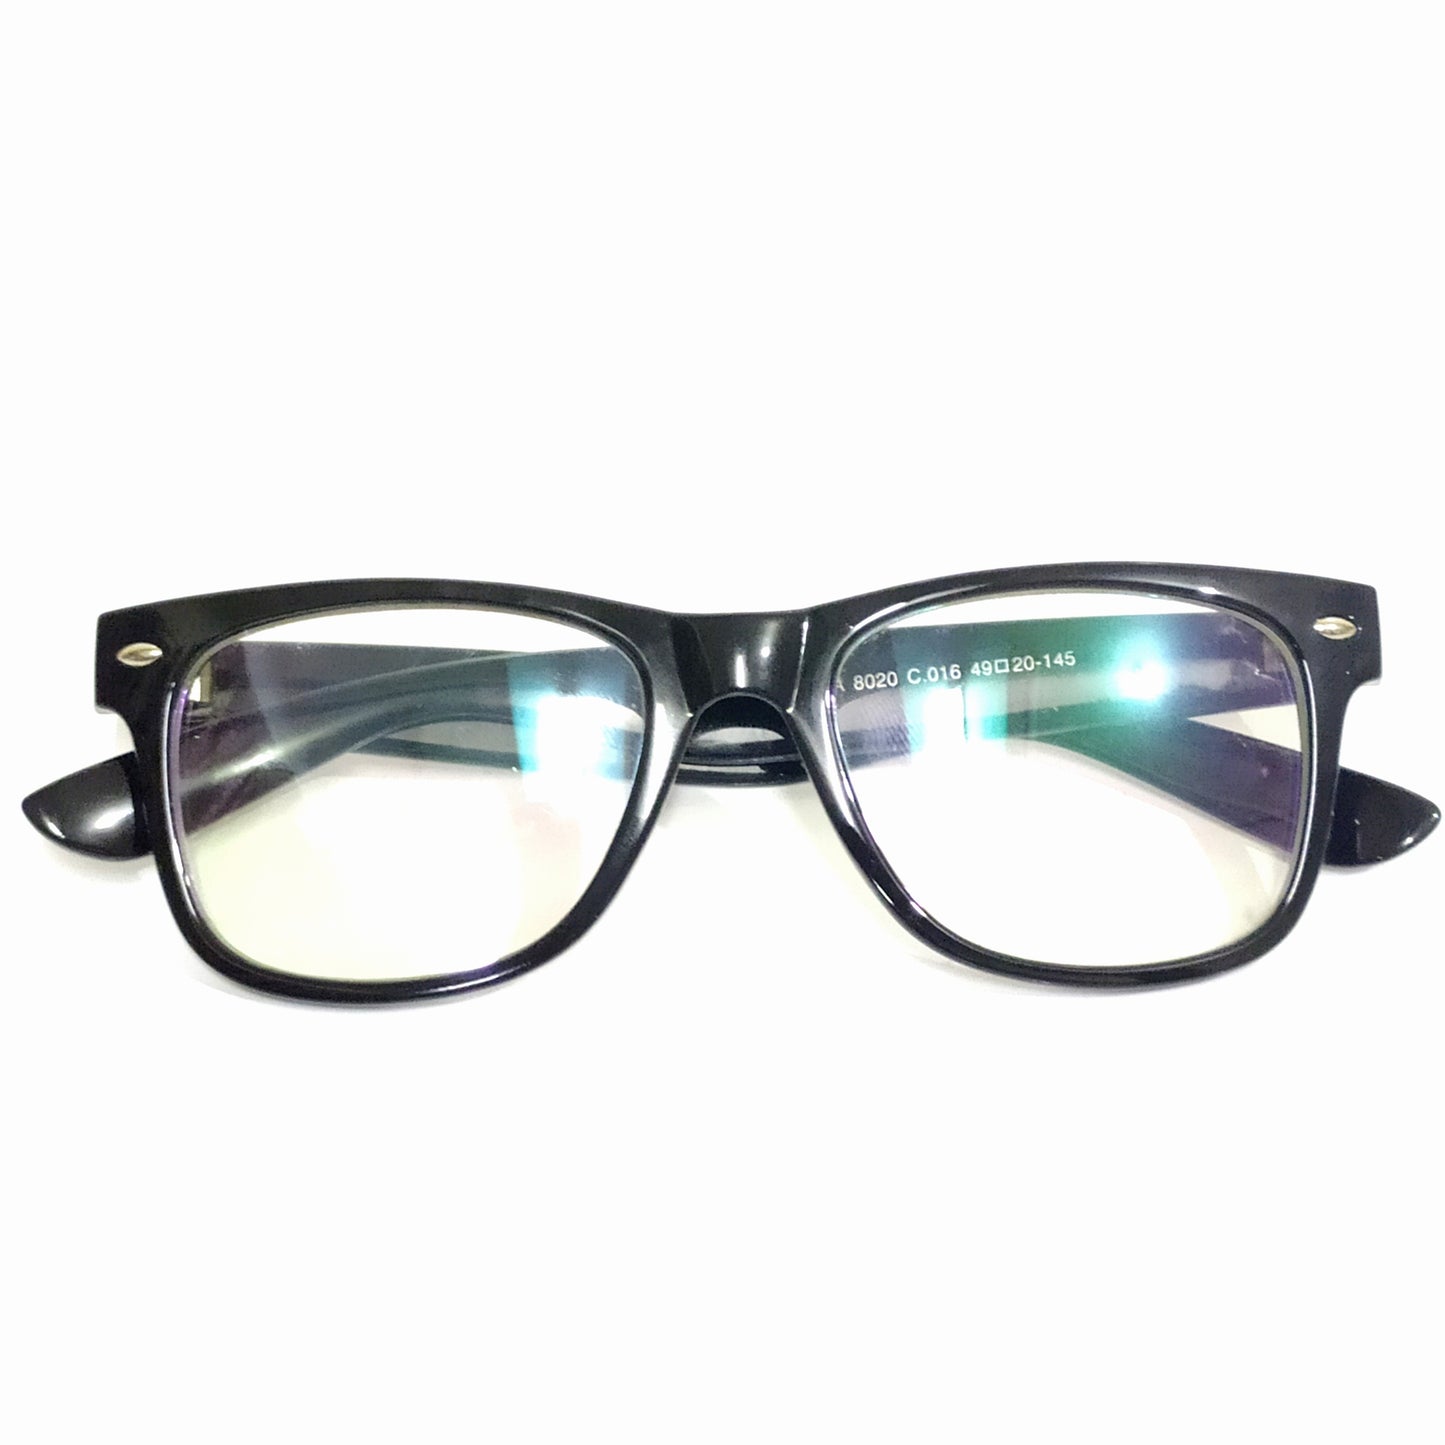 Black Spectacle Frames Glasses 8020